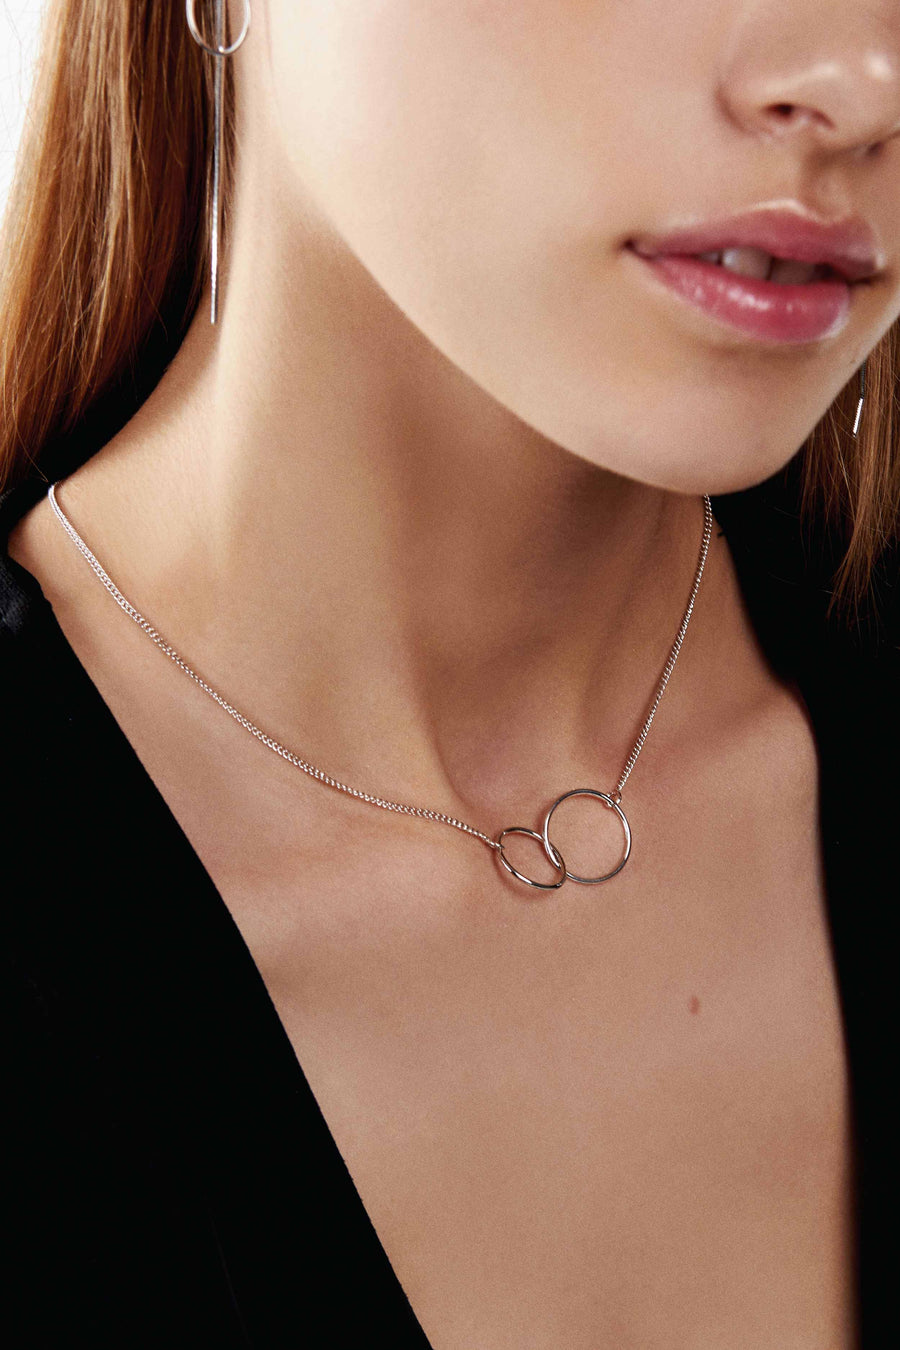 Lovesick Jewelry Sterling Silver Hoop Necklace